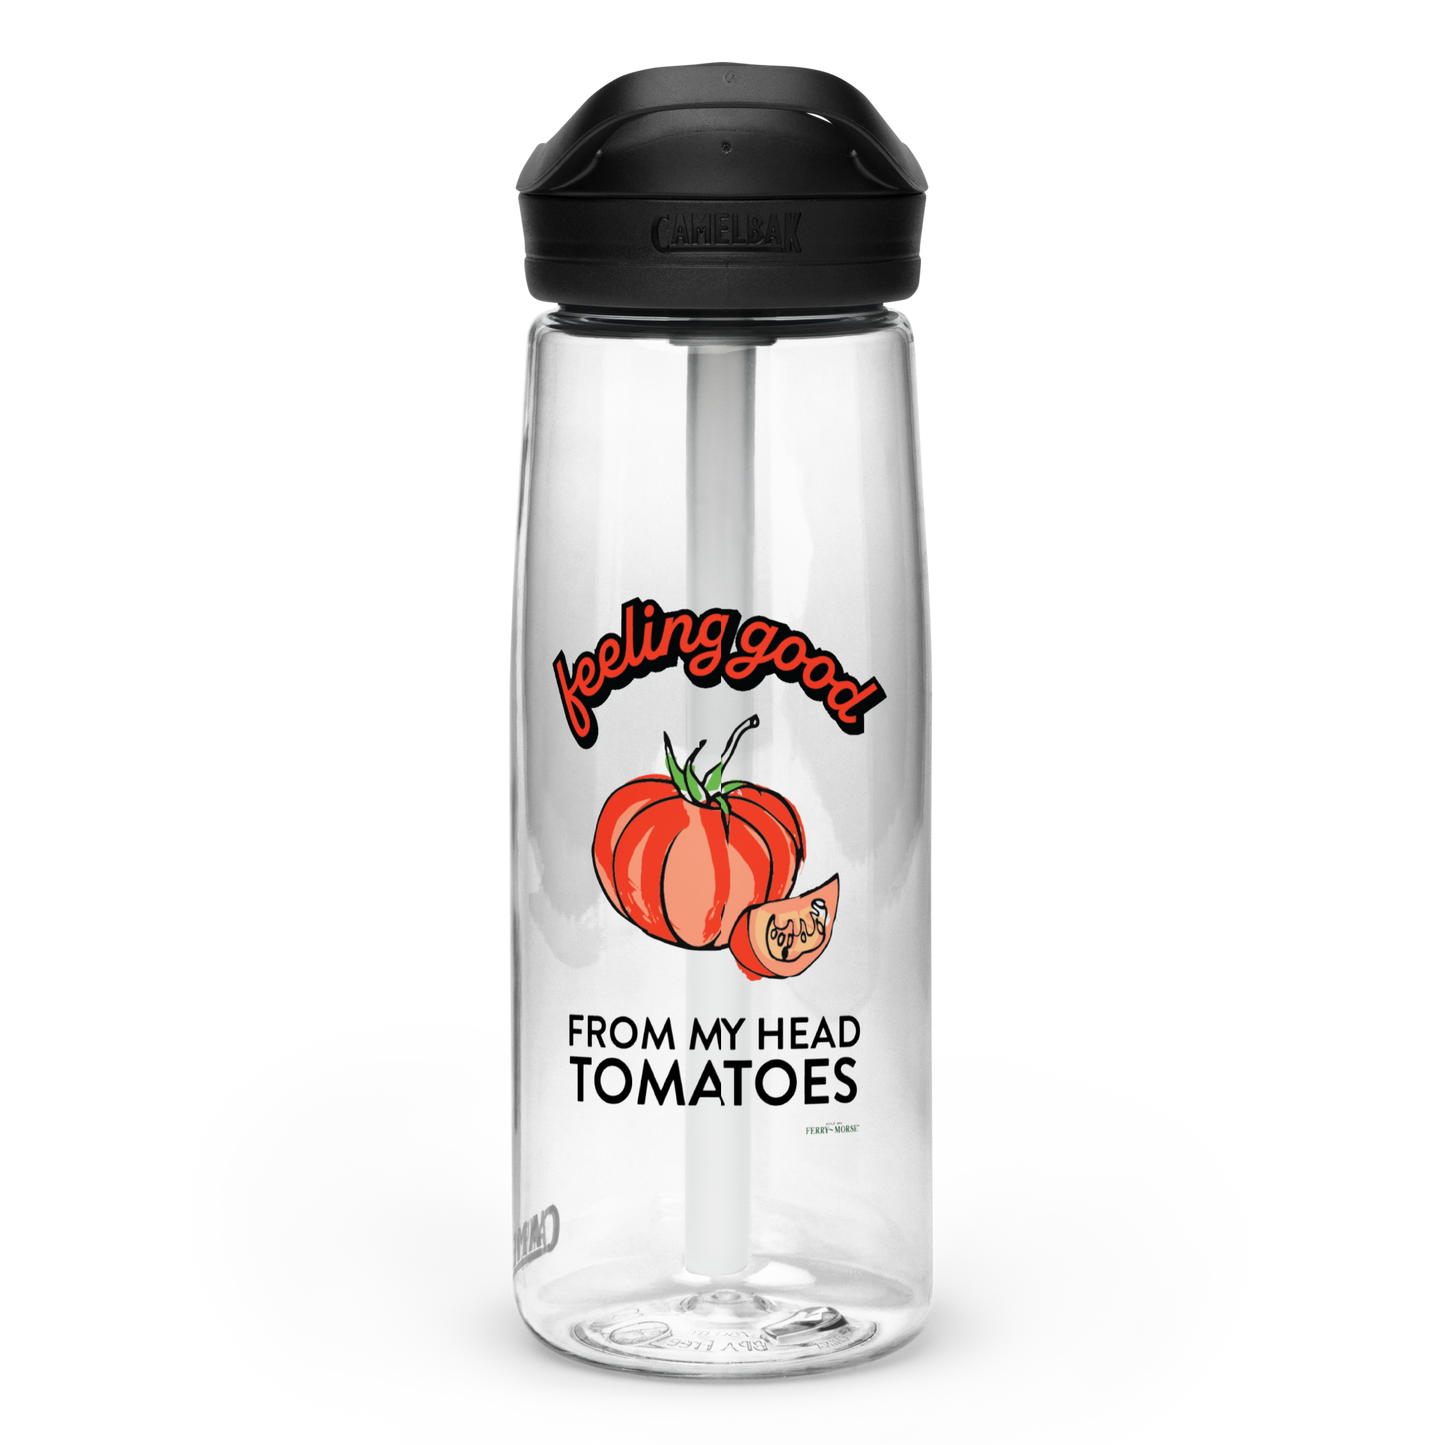 "Feeling Good" Tomato water bottle